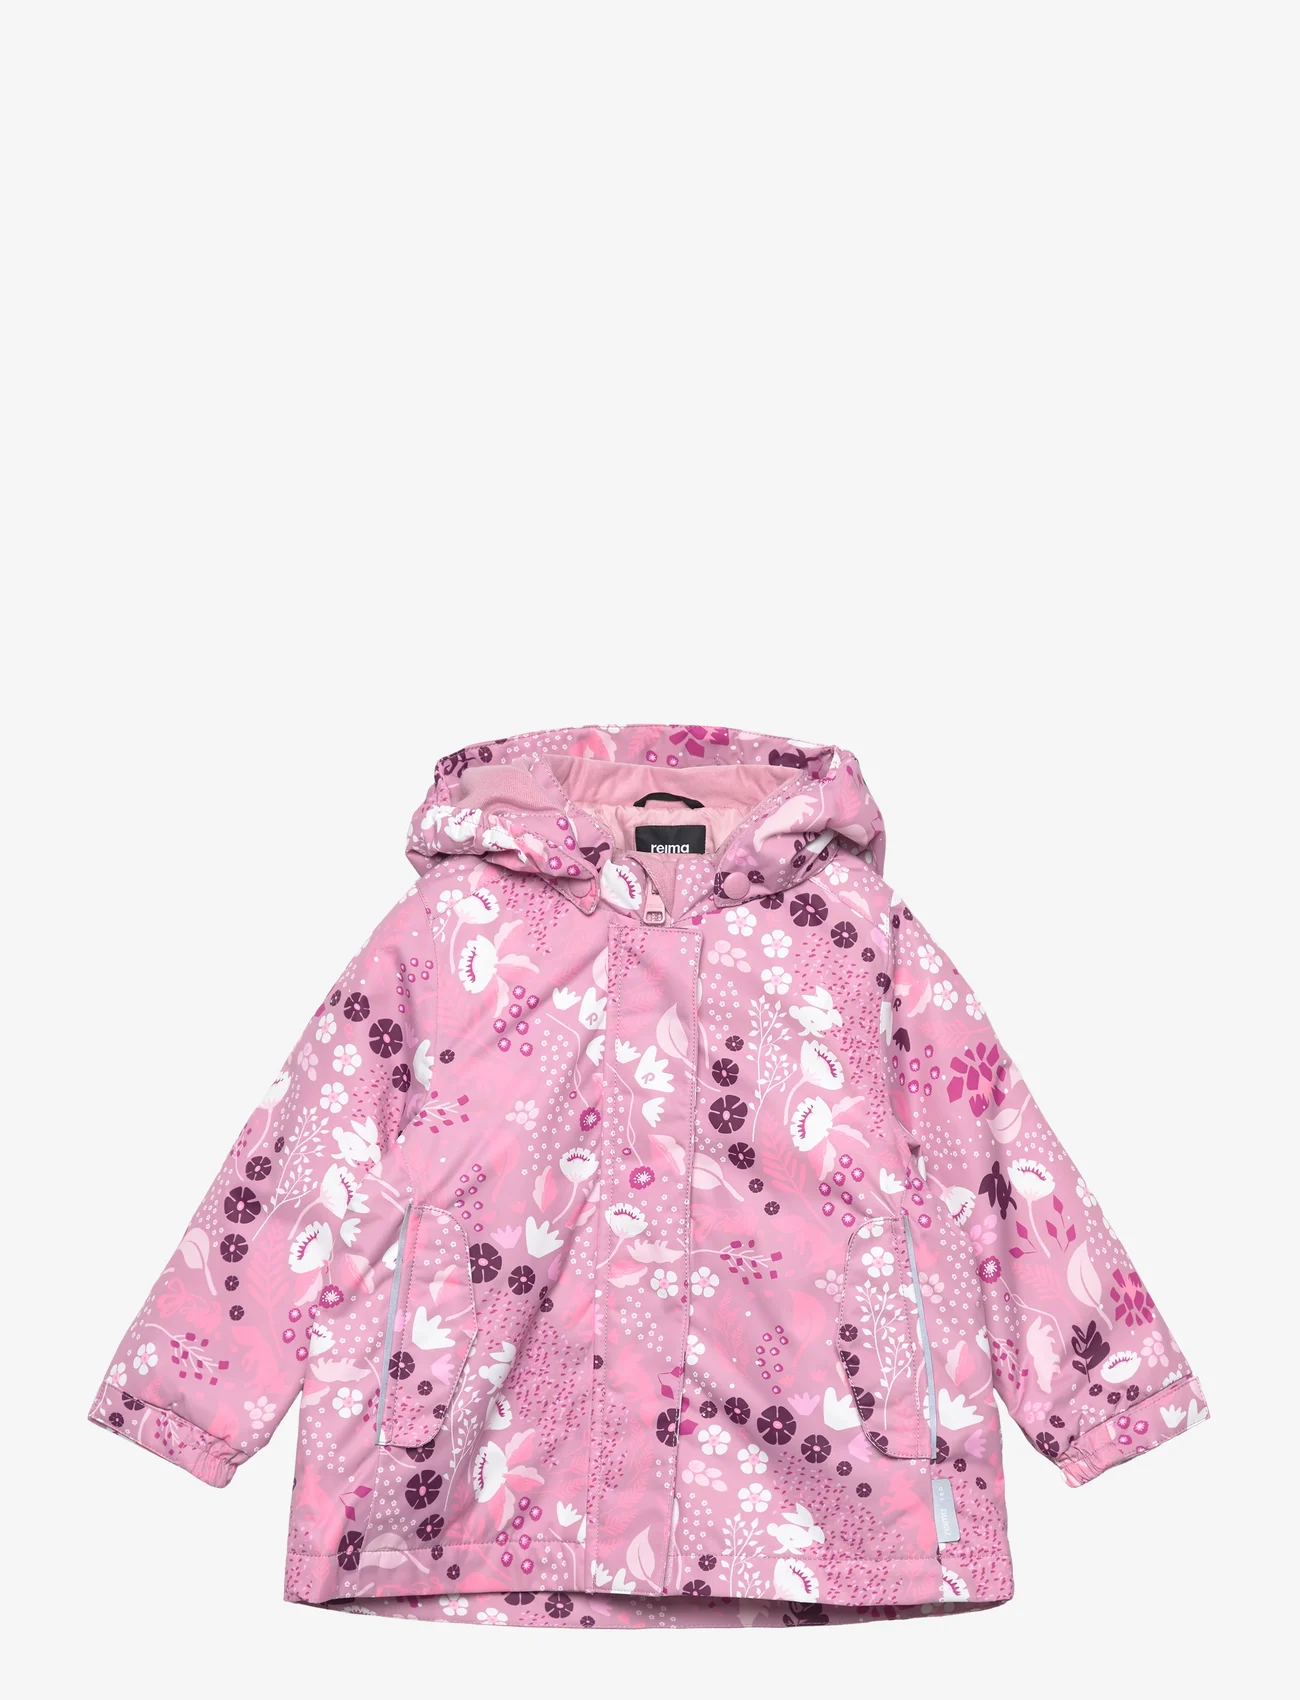 Reima - Toddlers' winter jacket Kuhmoinen - skaljackor - grey pink - 0